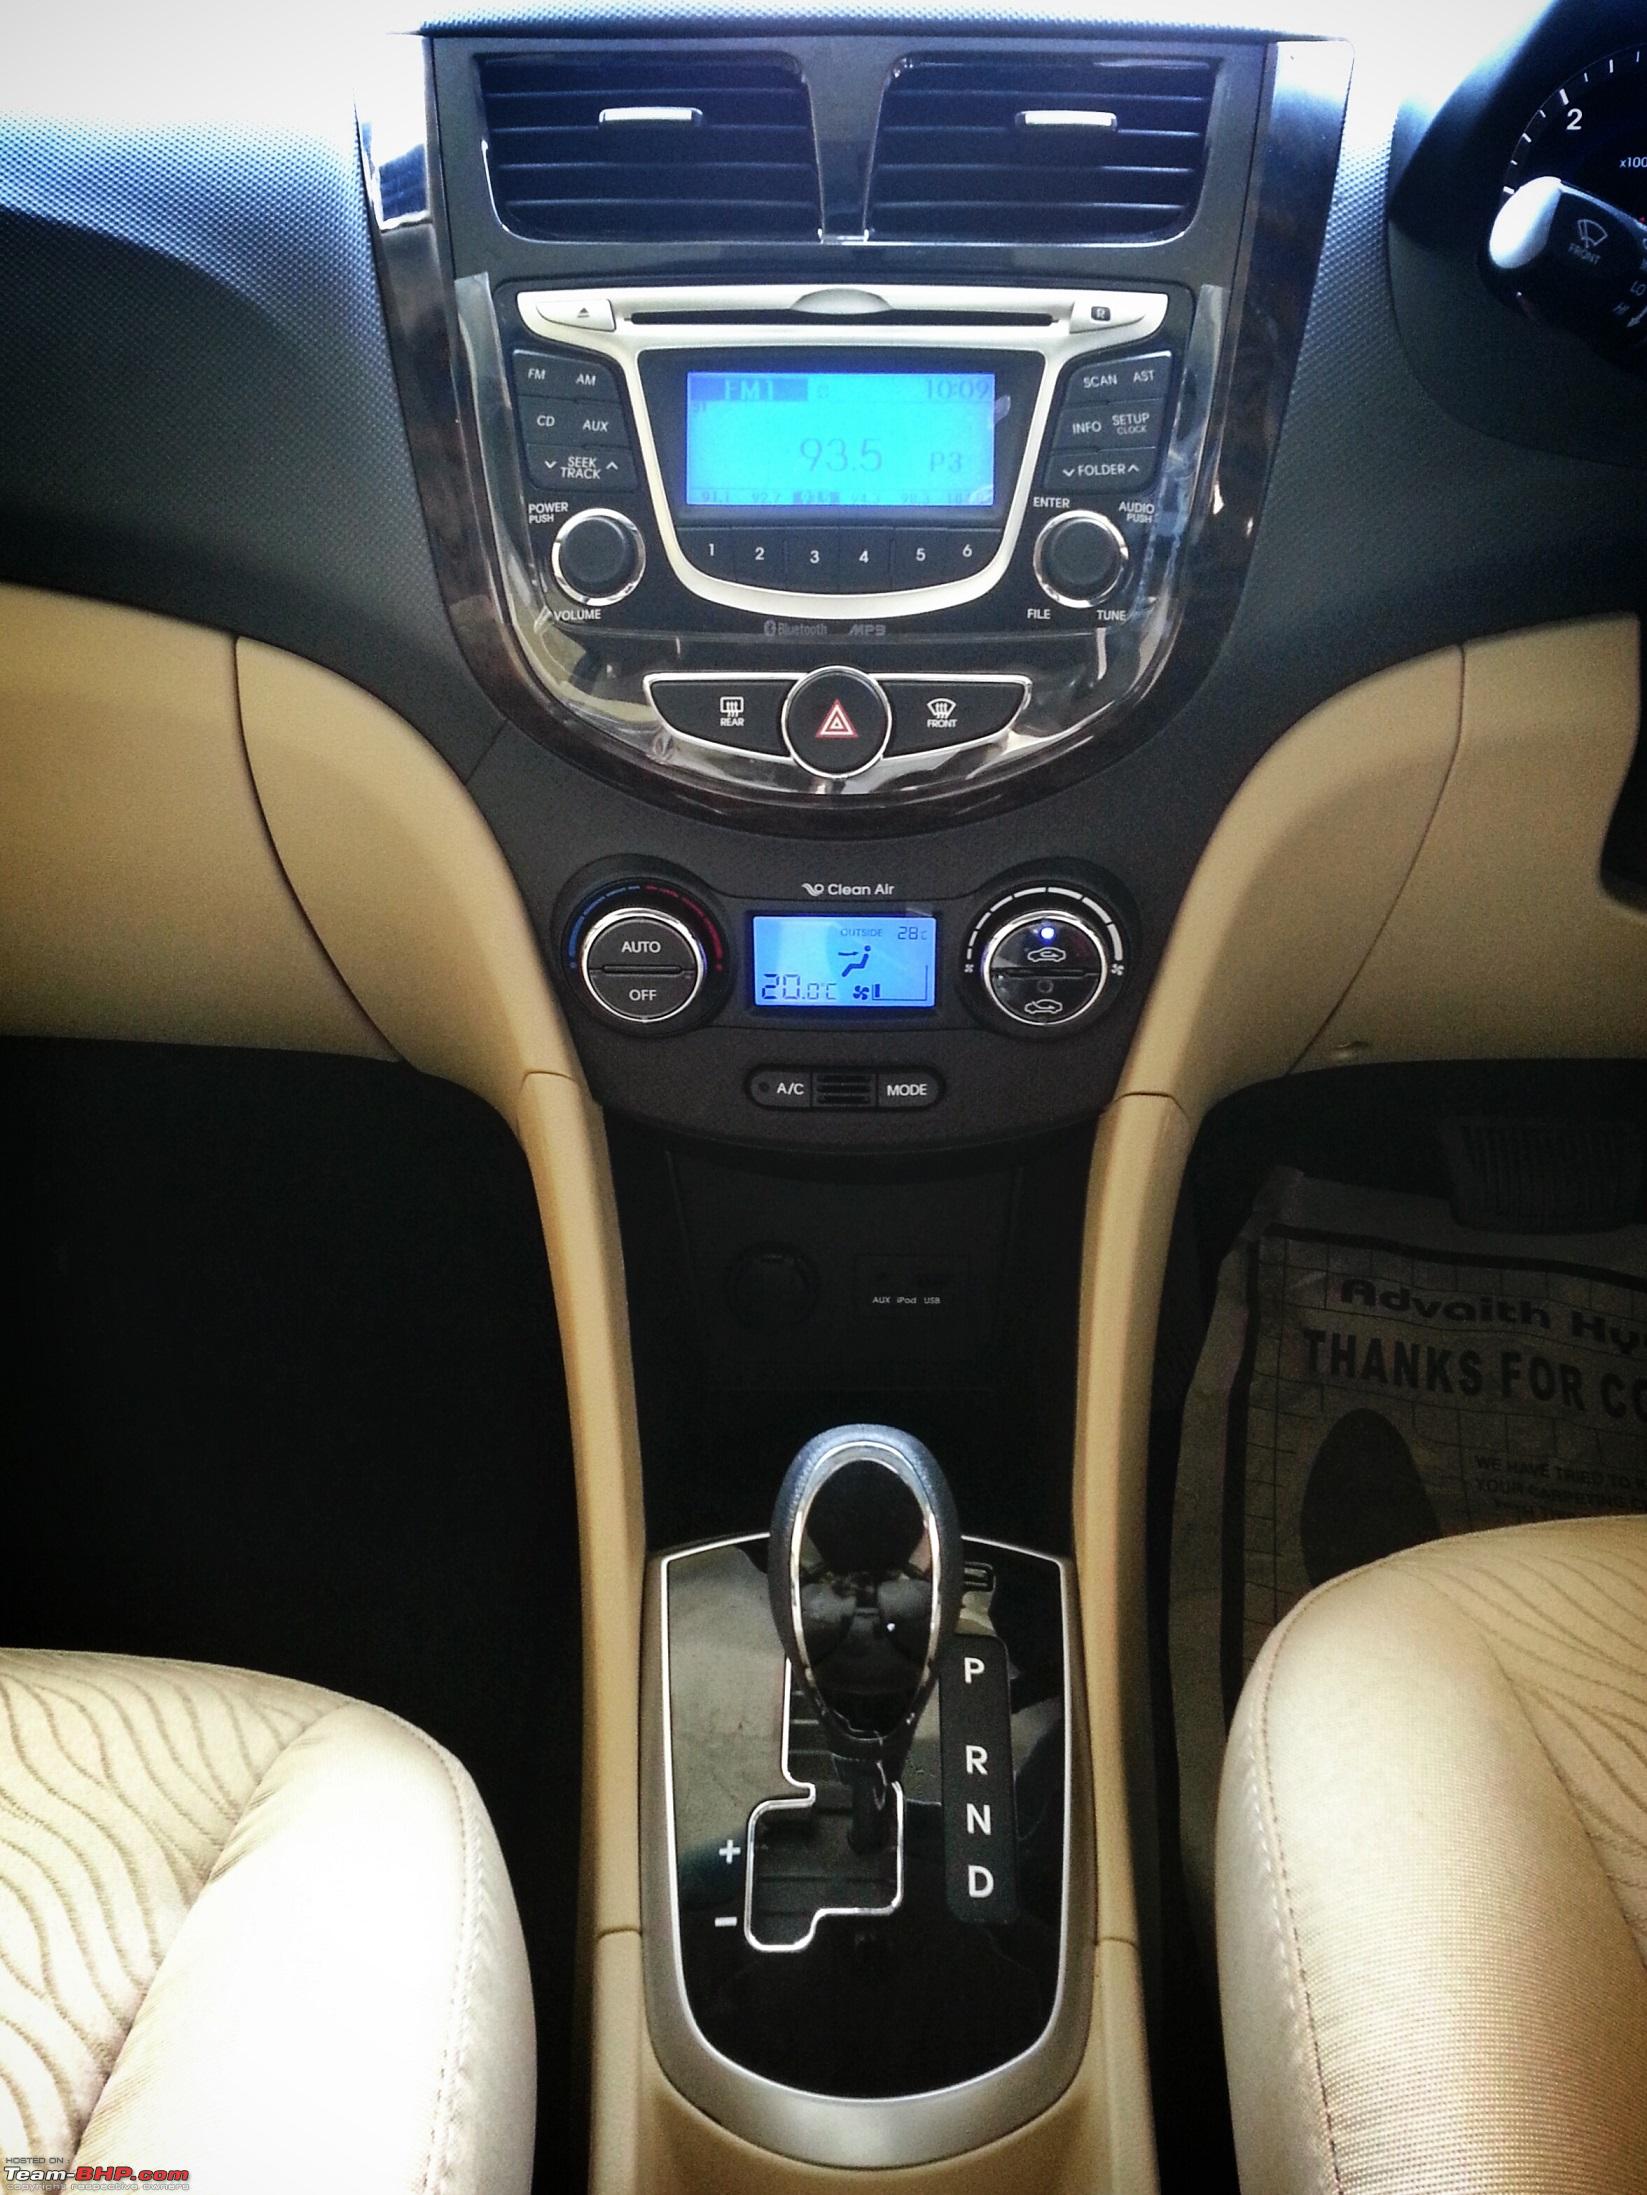 My new ride arrives - 2014 Hyundai Verna Fluidic 1.6 CRDi Automatic  Transmission - Team-BHP